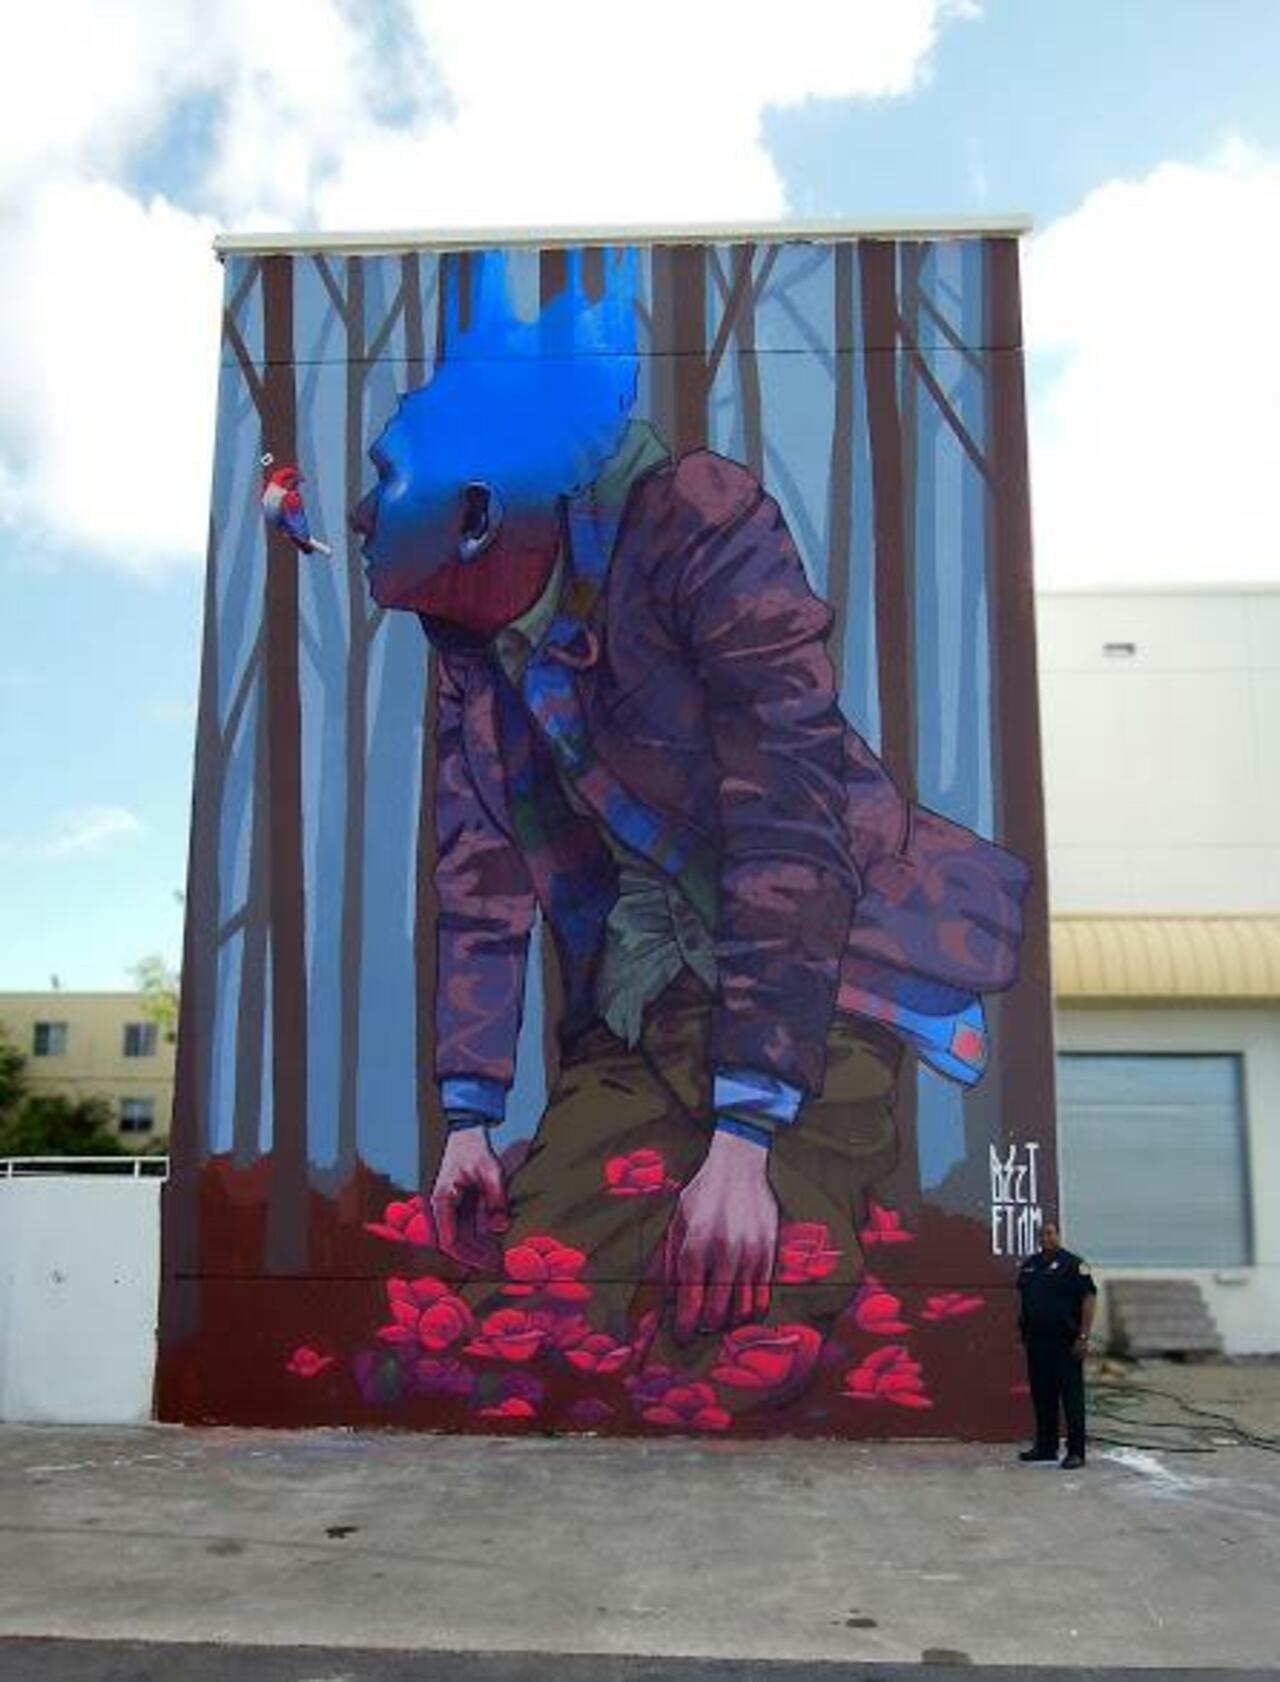 The Genius of Etam Cru #graffiti #streetart #urbanart #spraypaint #stencil #mural #art http://t.co/uWahF4Rrro